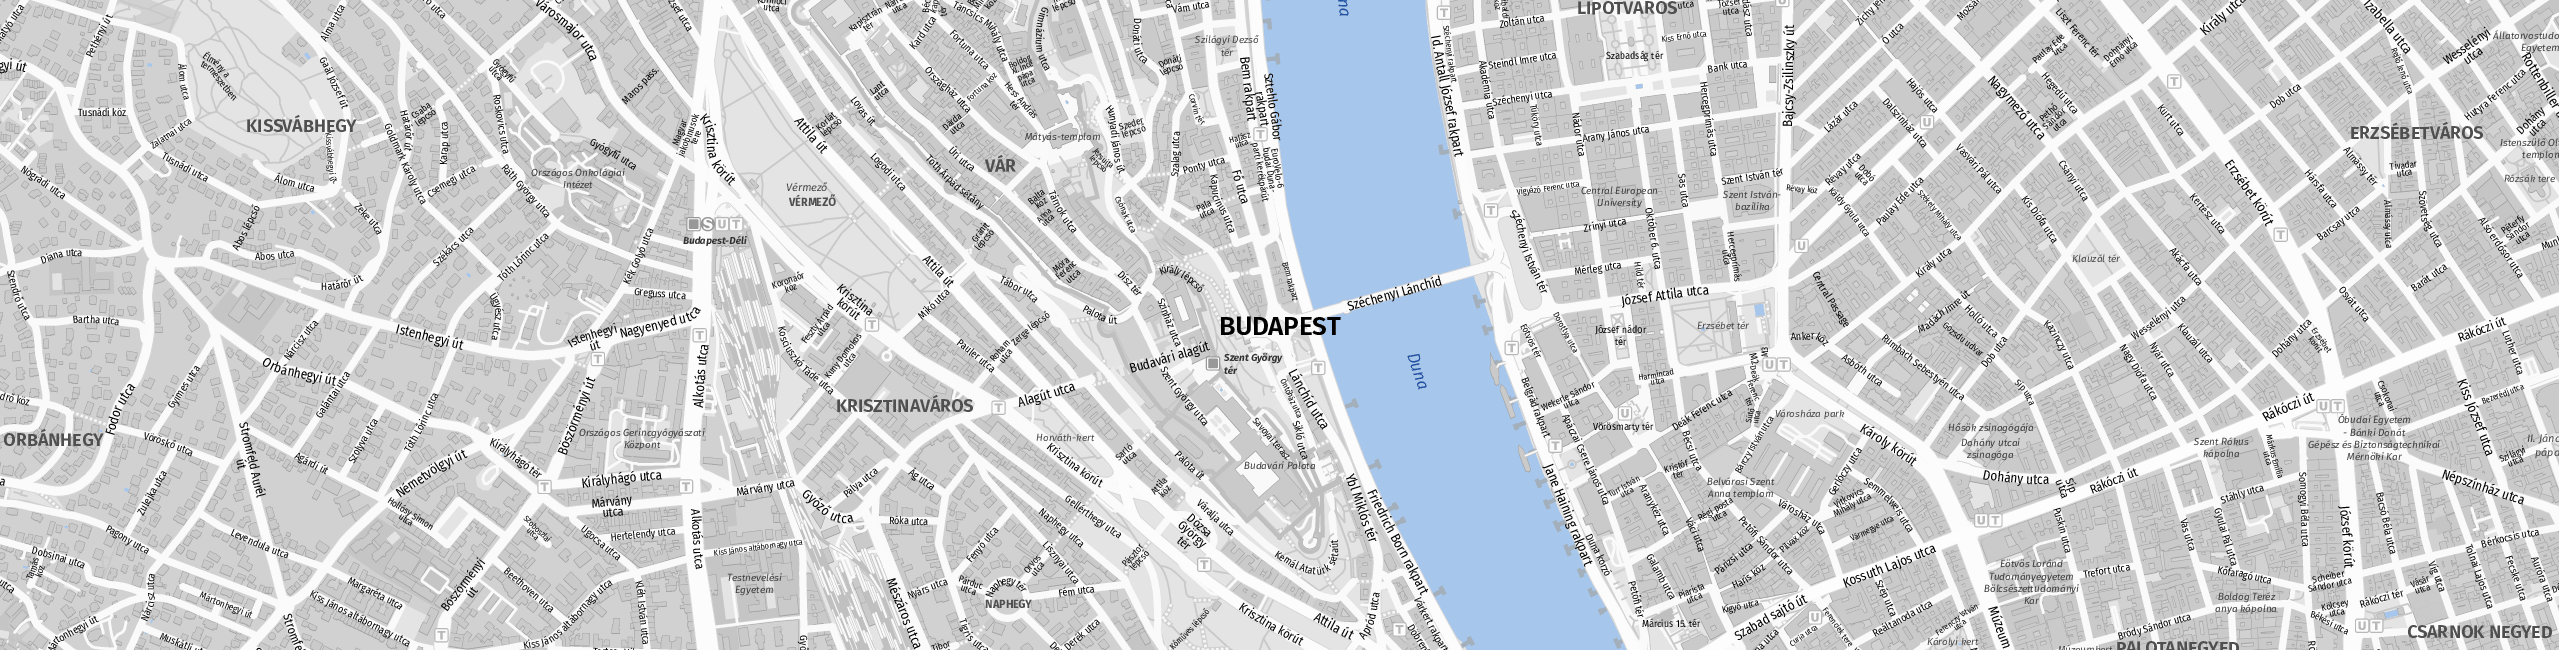 Stadtplan Budapest zum Downloaden.